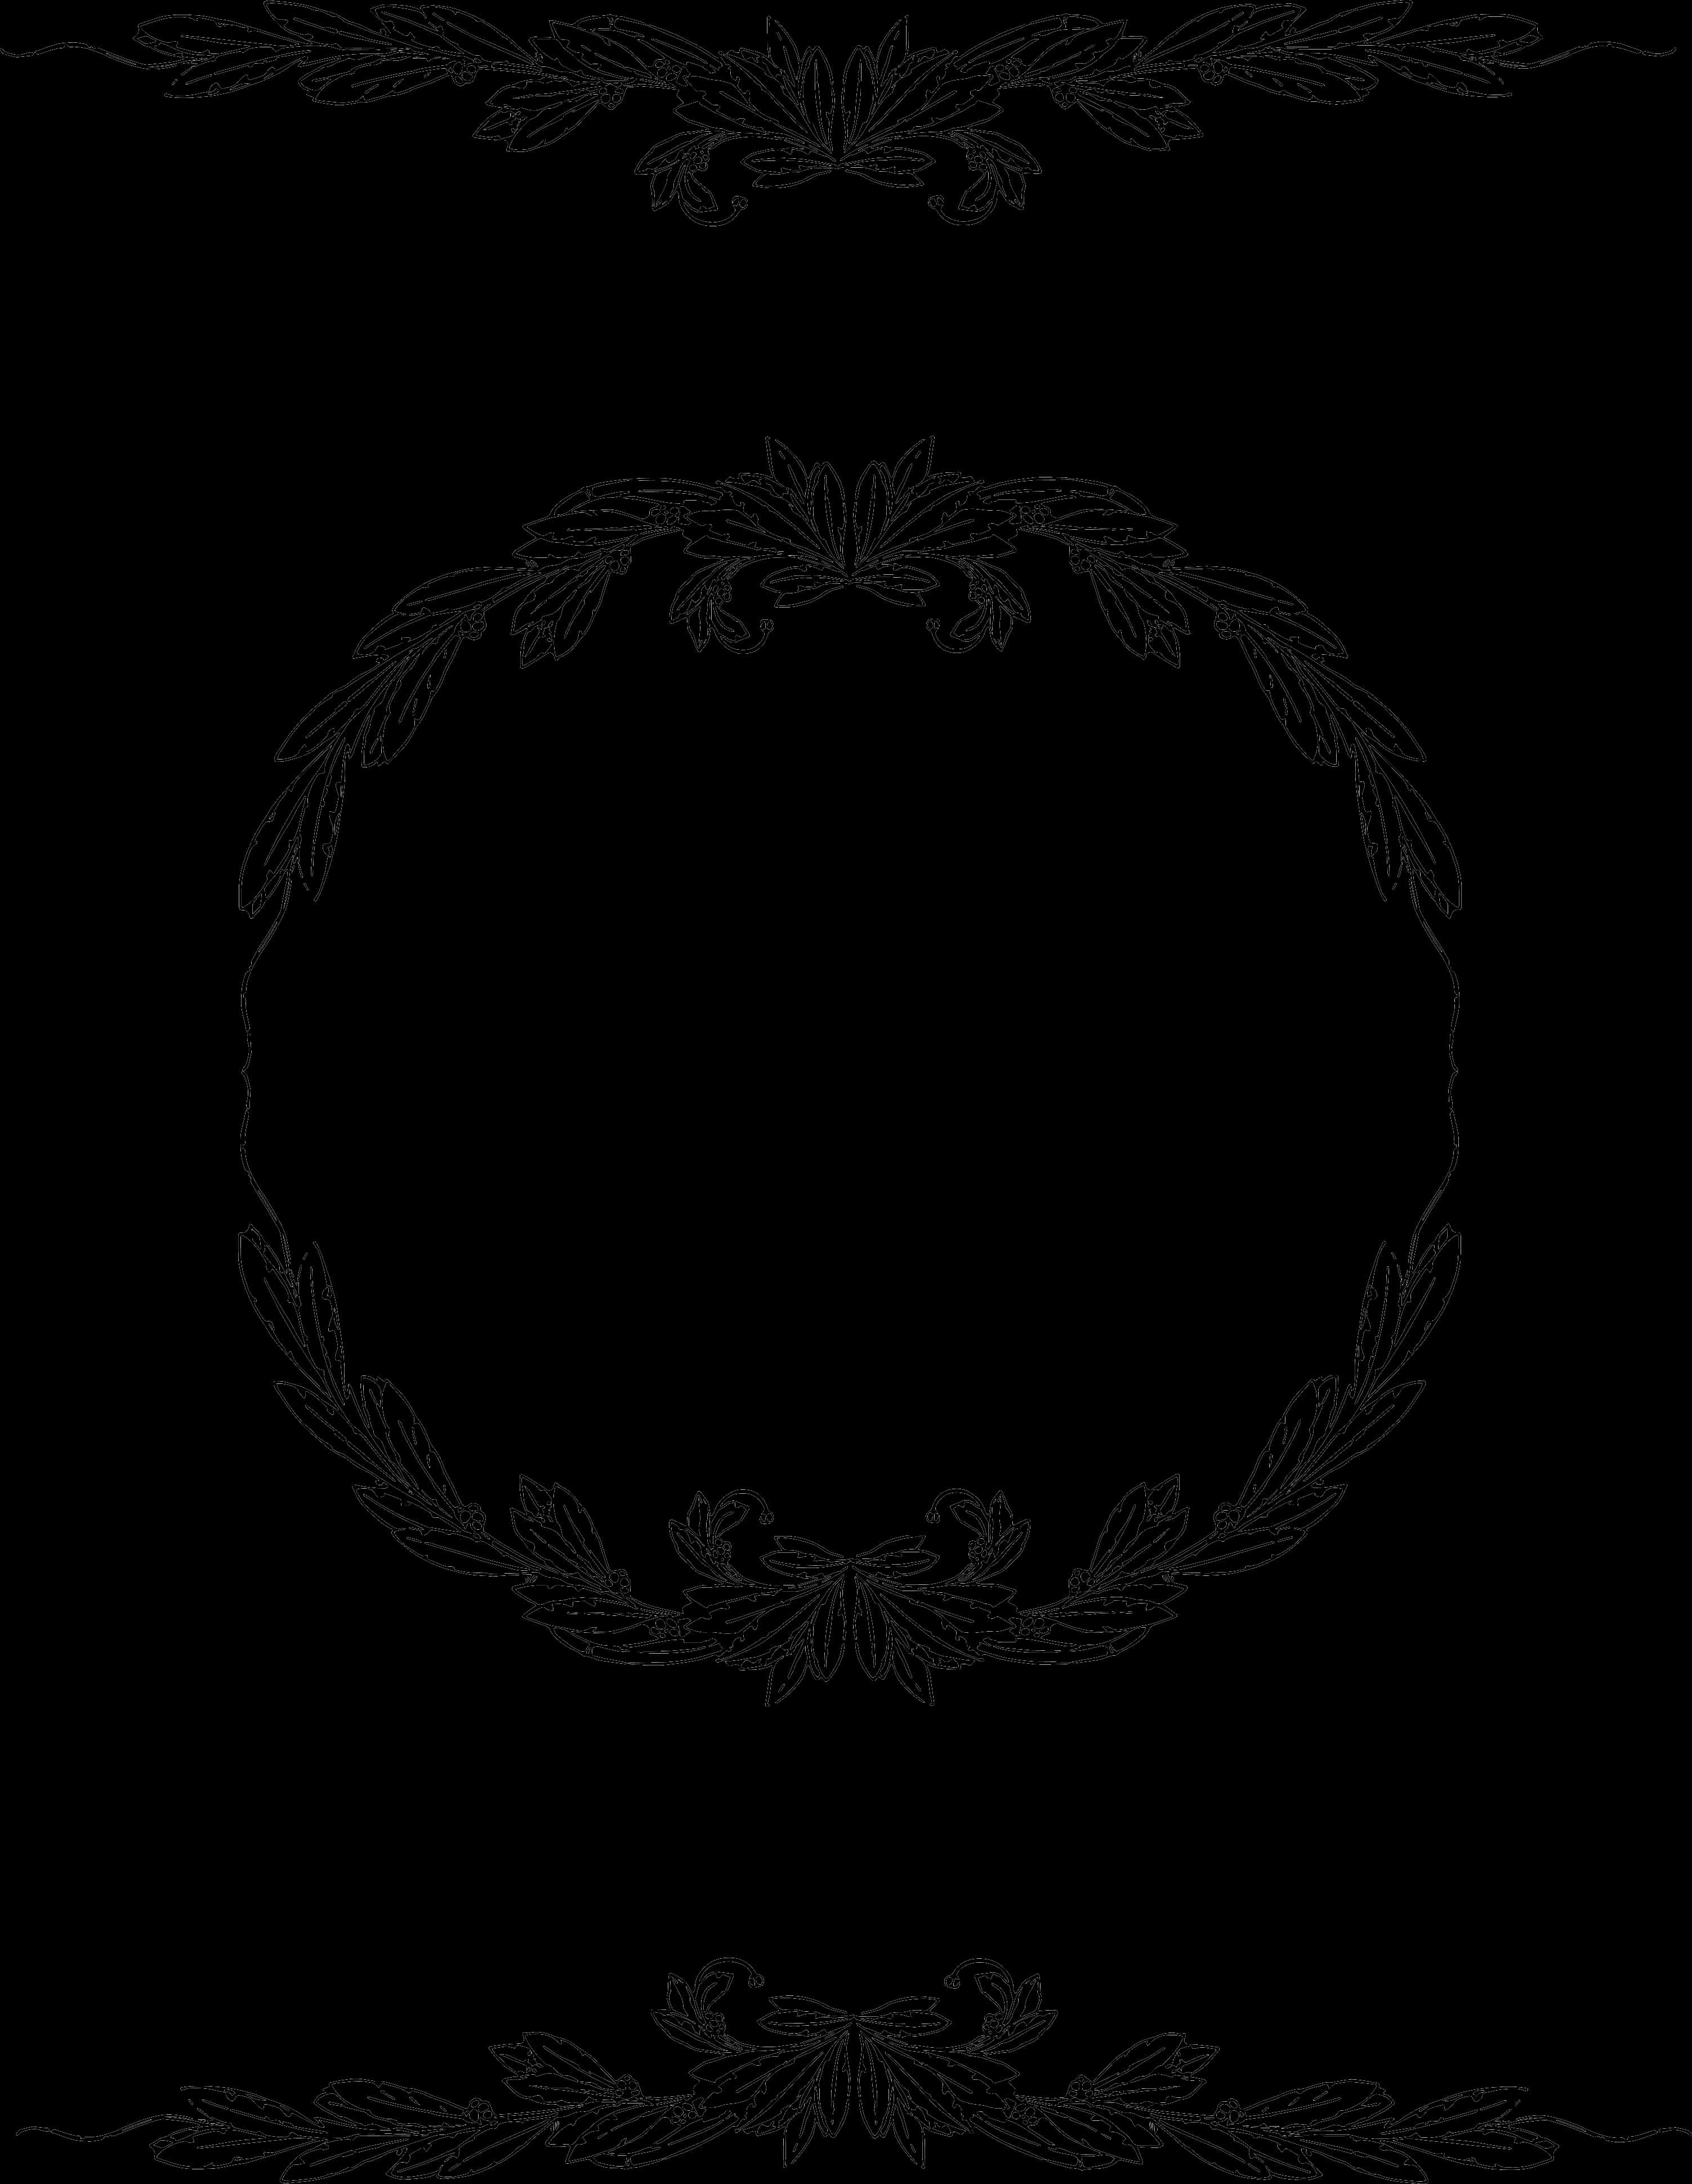 A Black And White Circular Frame